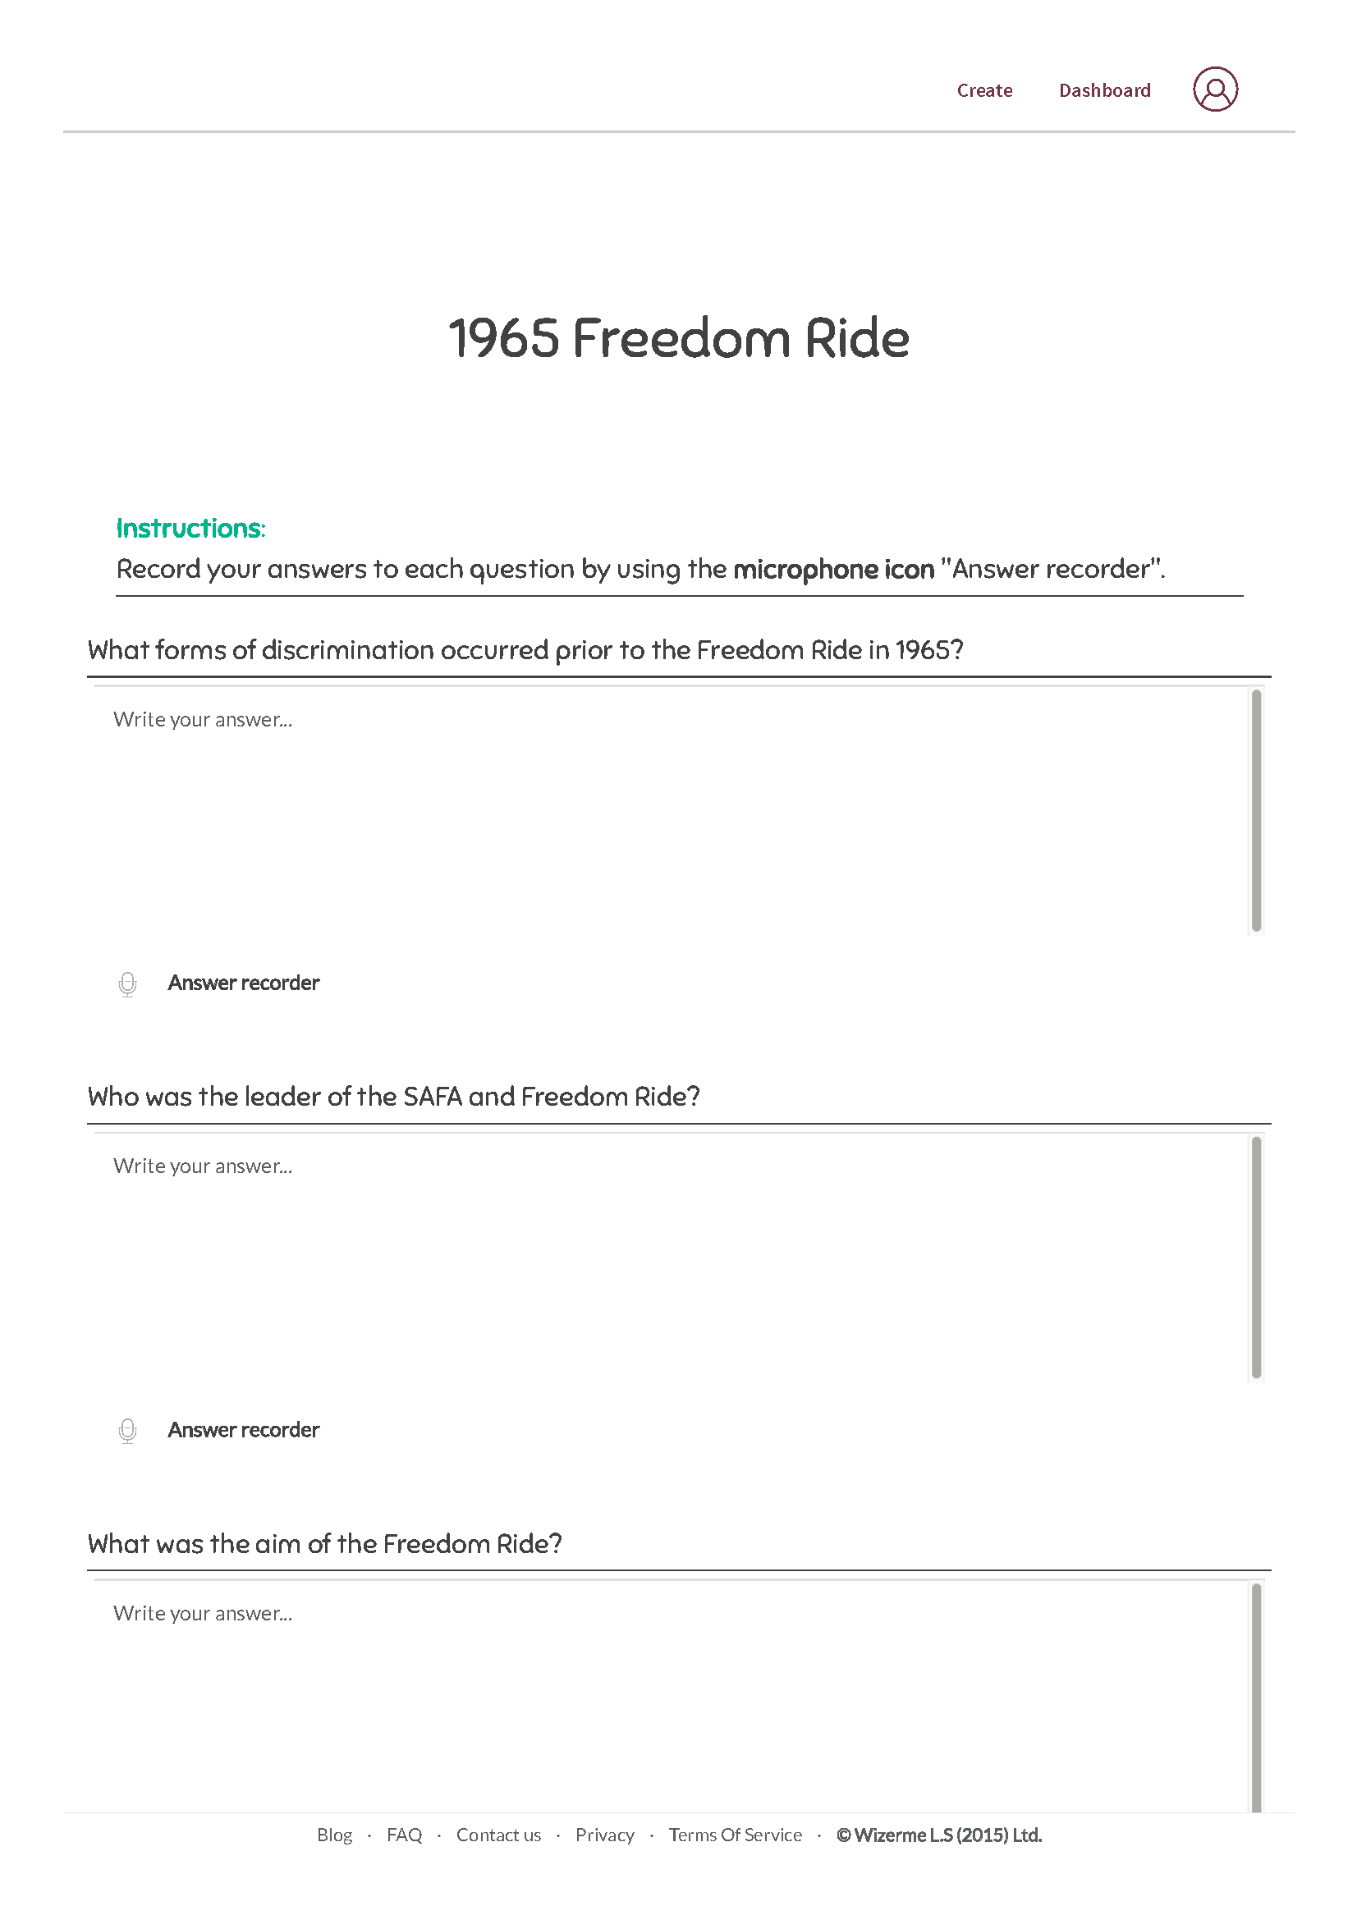 Wizer screen shot of Freedom Ride quiz